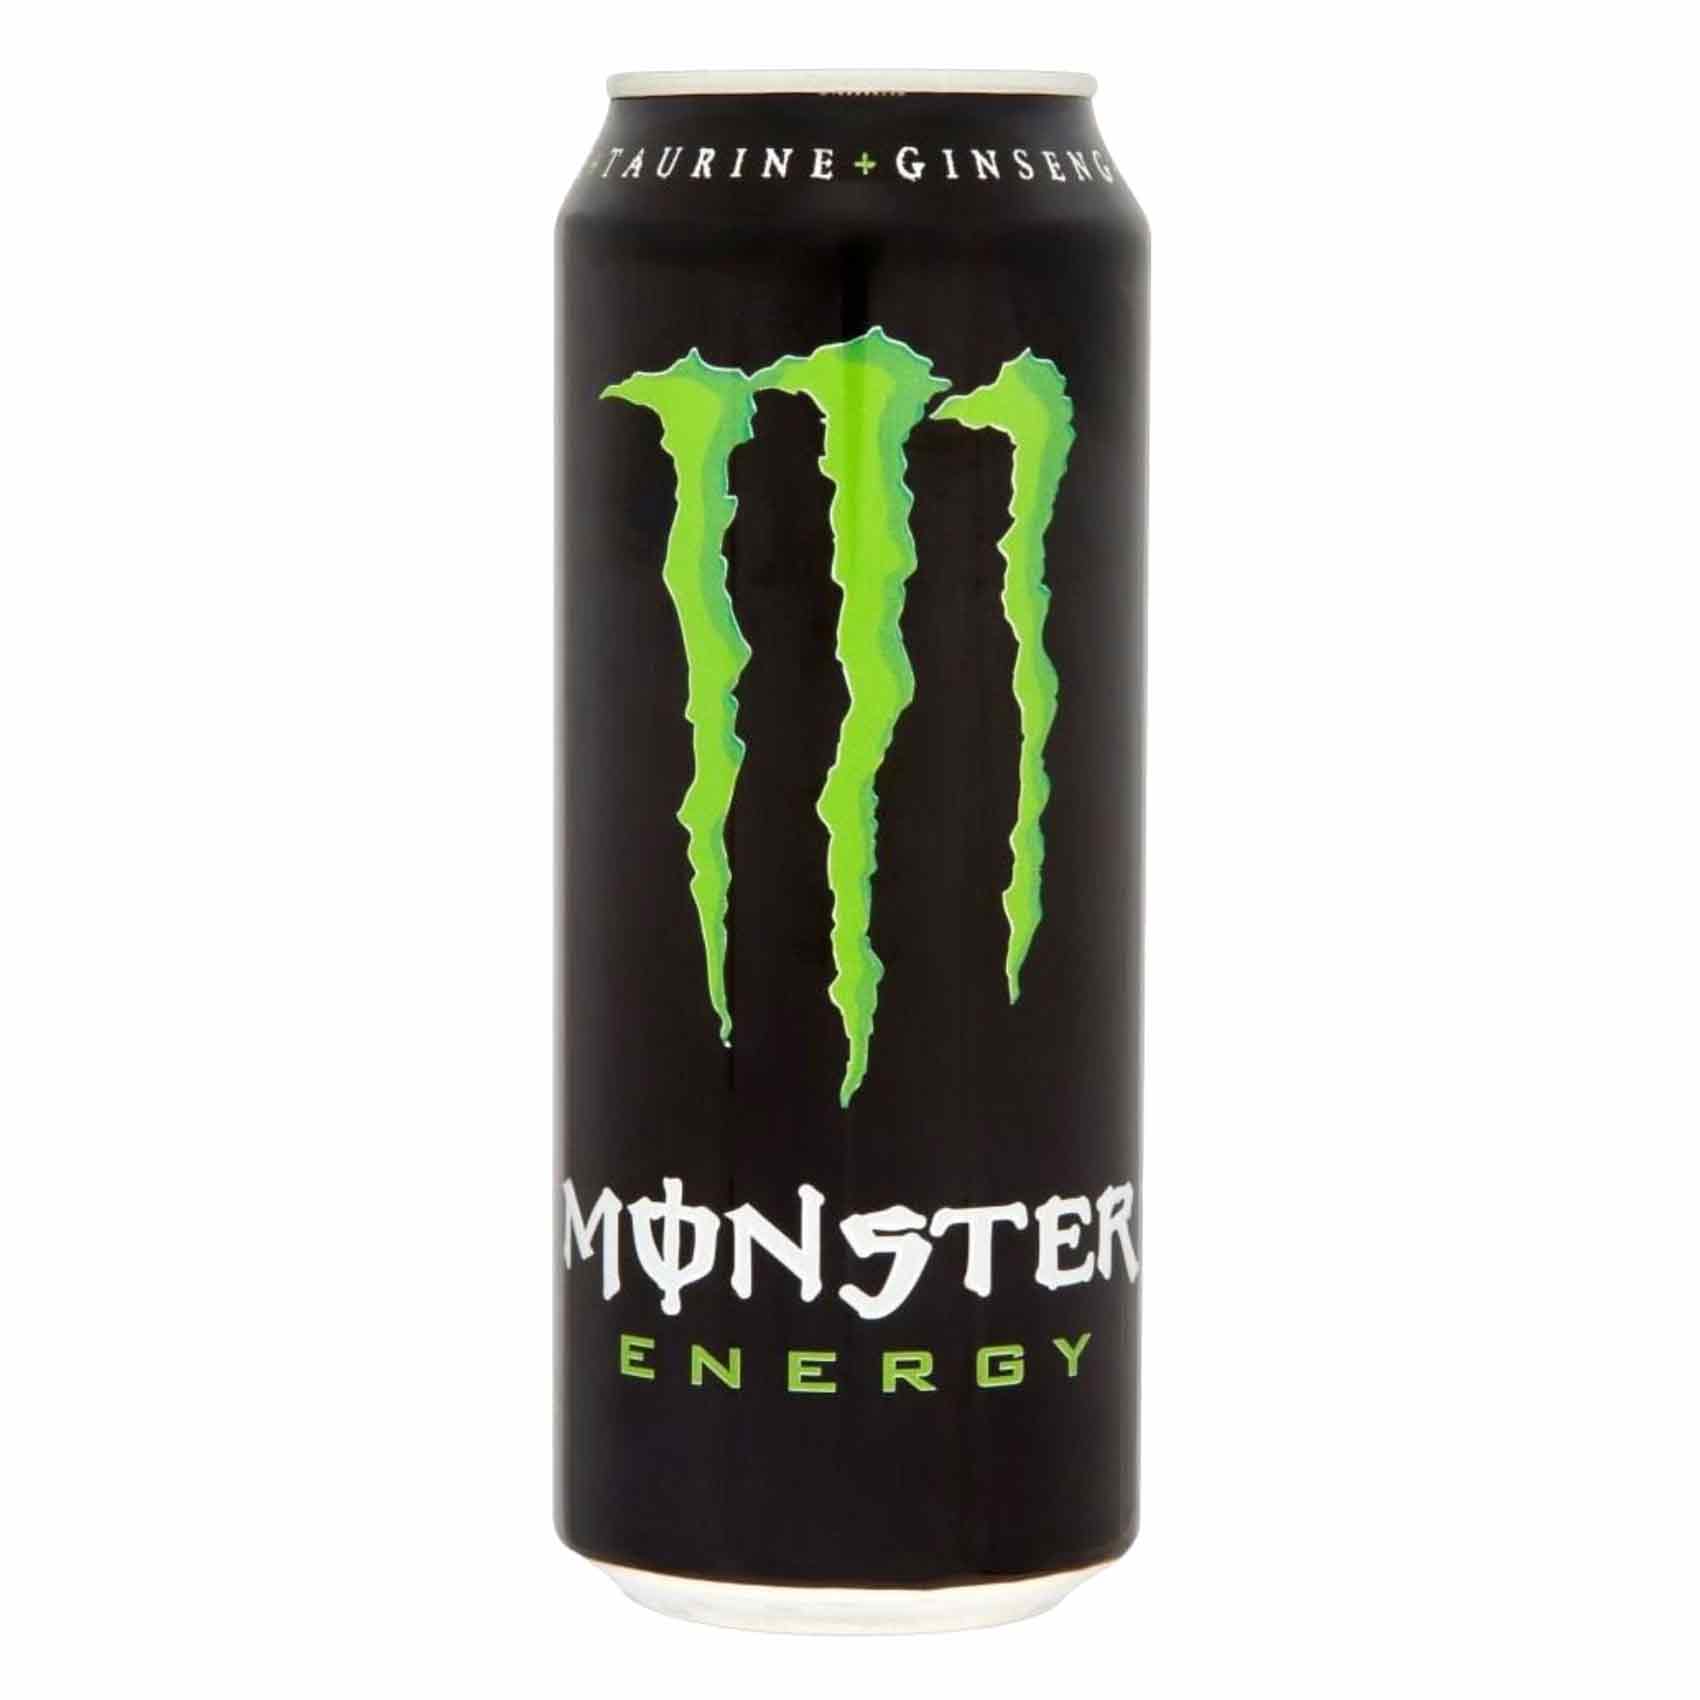 Monster Original Energy Drink 500ml